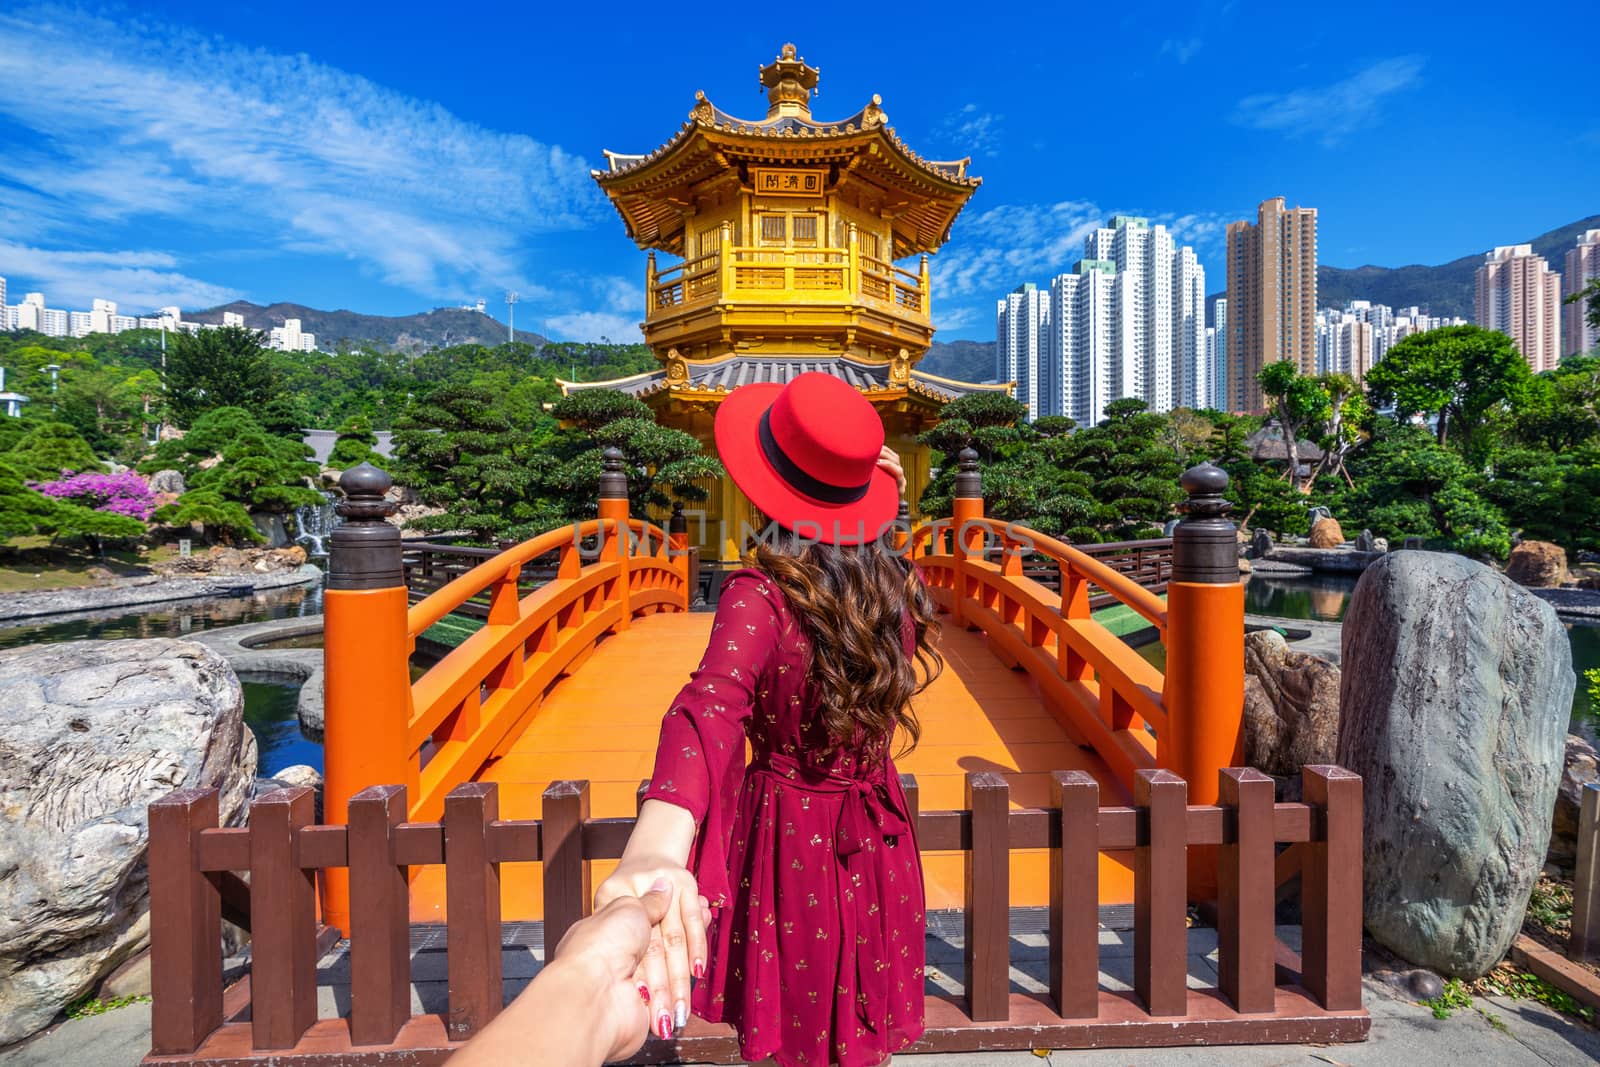 Women tourists holding man's hand and leading him to Golden Pavilion in Nan Lian Garden near Chi Lin Nunnery temple, Hong Kong.